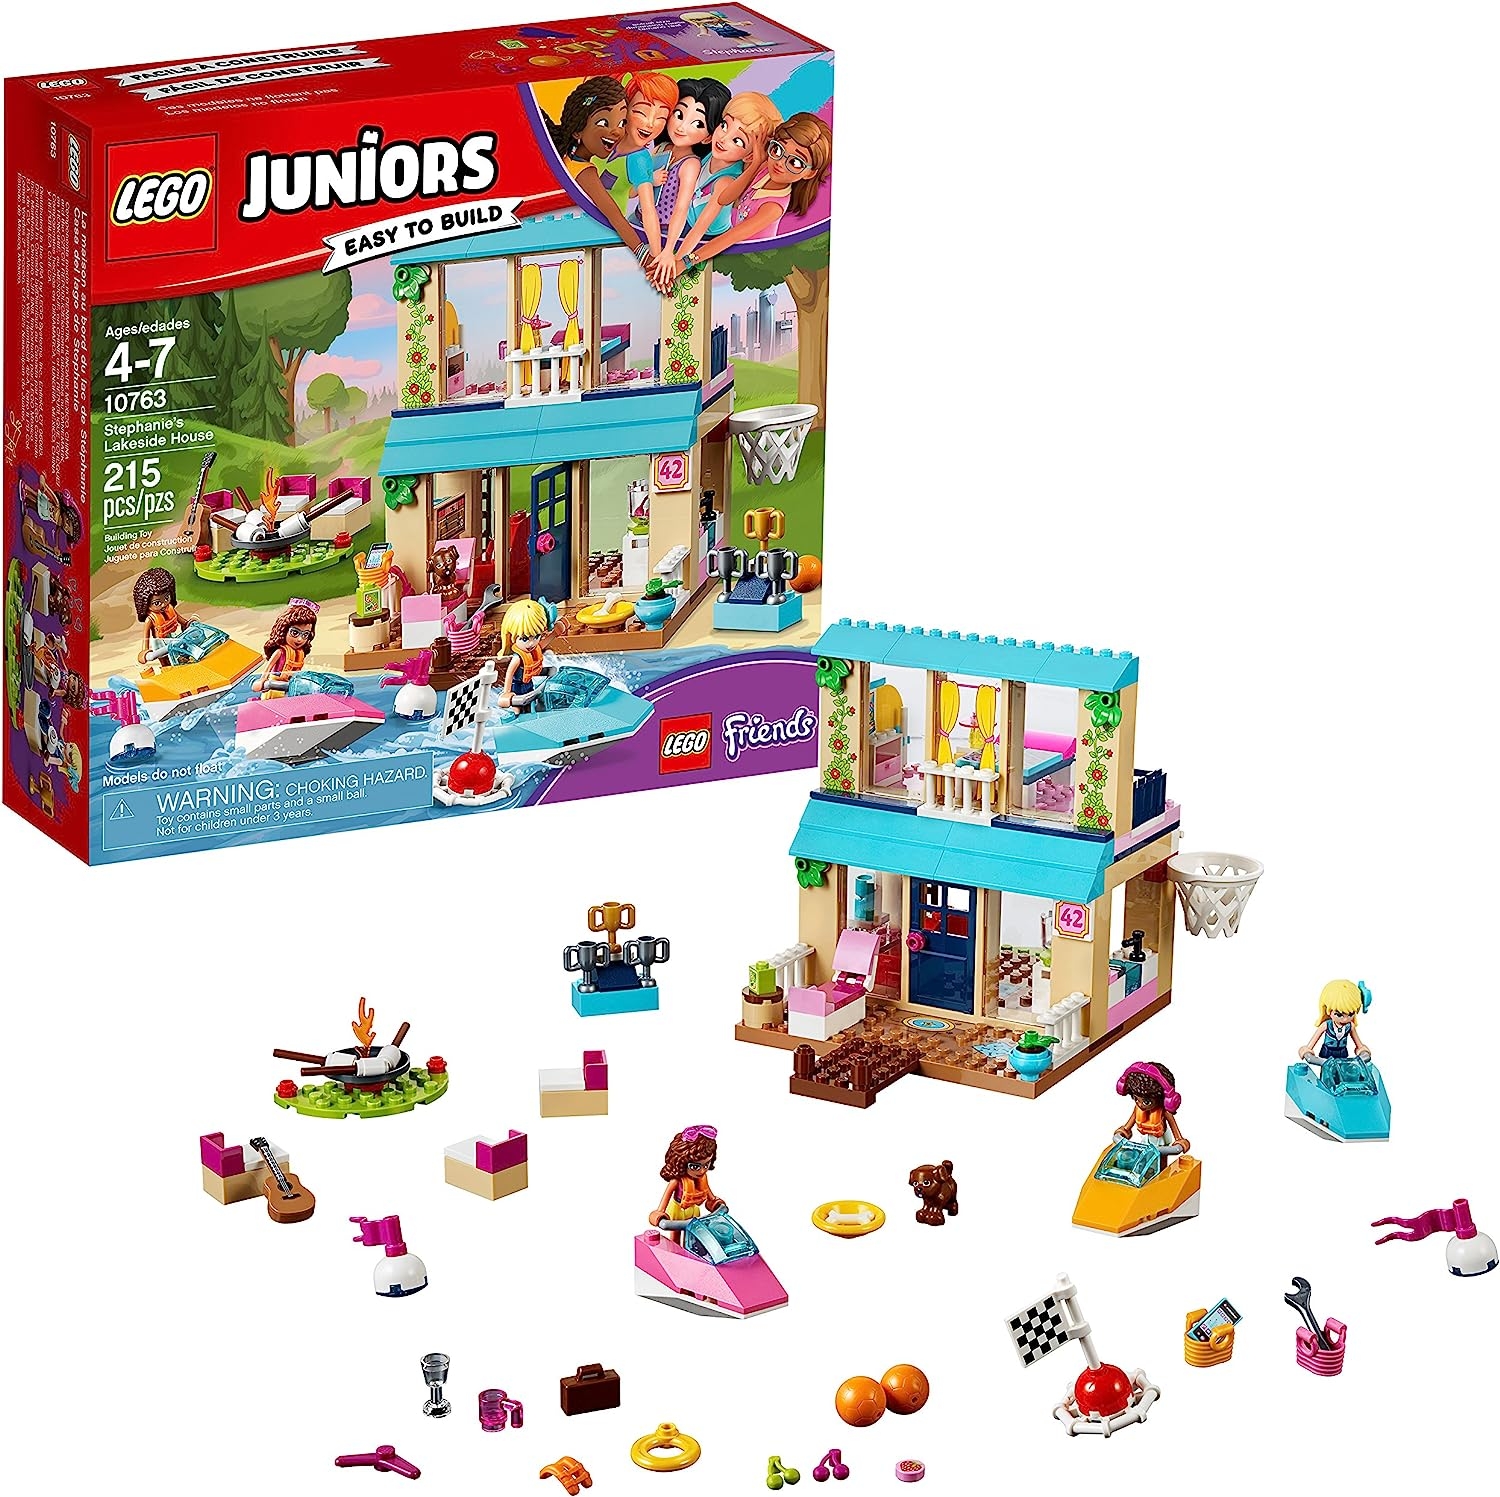 LEGO Juniors Stephanie’s Lakeside House 10763 Building Kit (215 Piece)   Import  Single ASIN  Import  Multiple ASIN